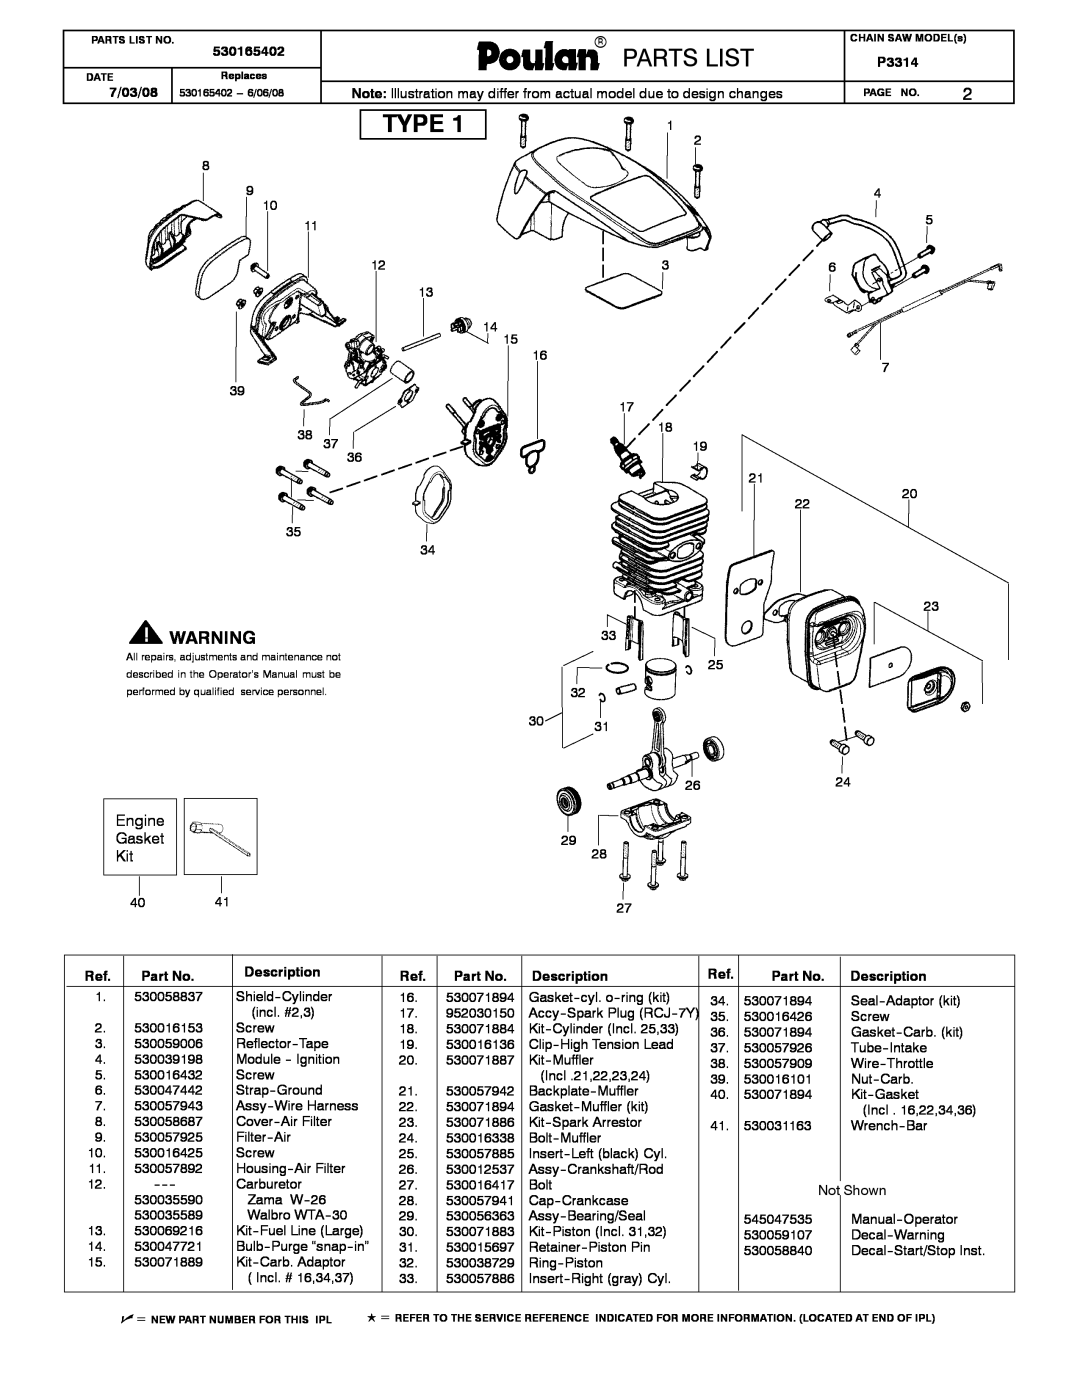 Poulan P3314 manual Type, Engine Gasket Kit, Description, WEED EATERRr, Partslist, Paramoupoulant, 530165402 